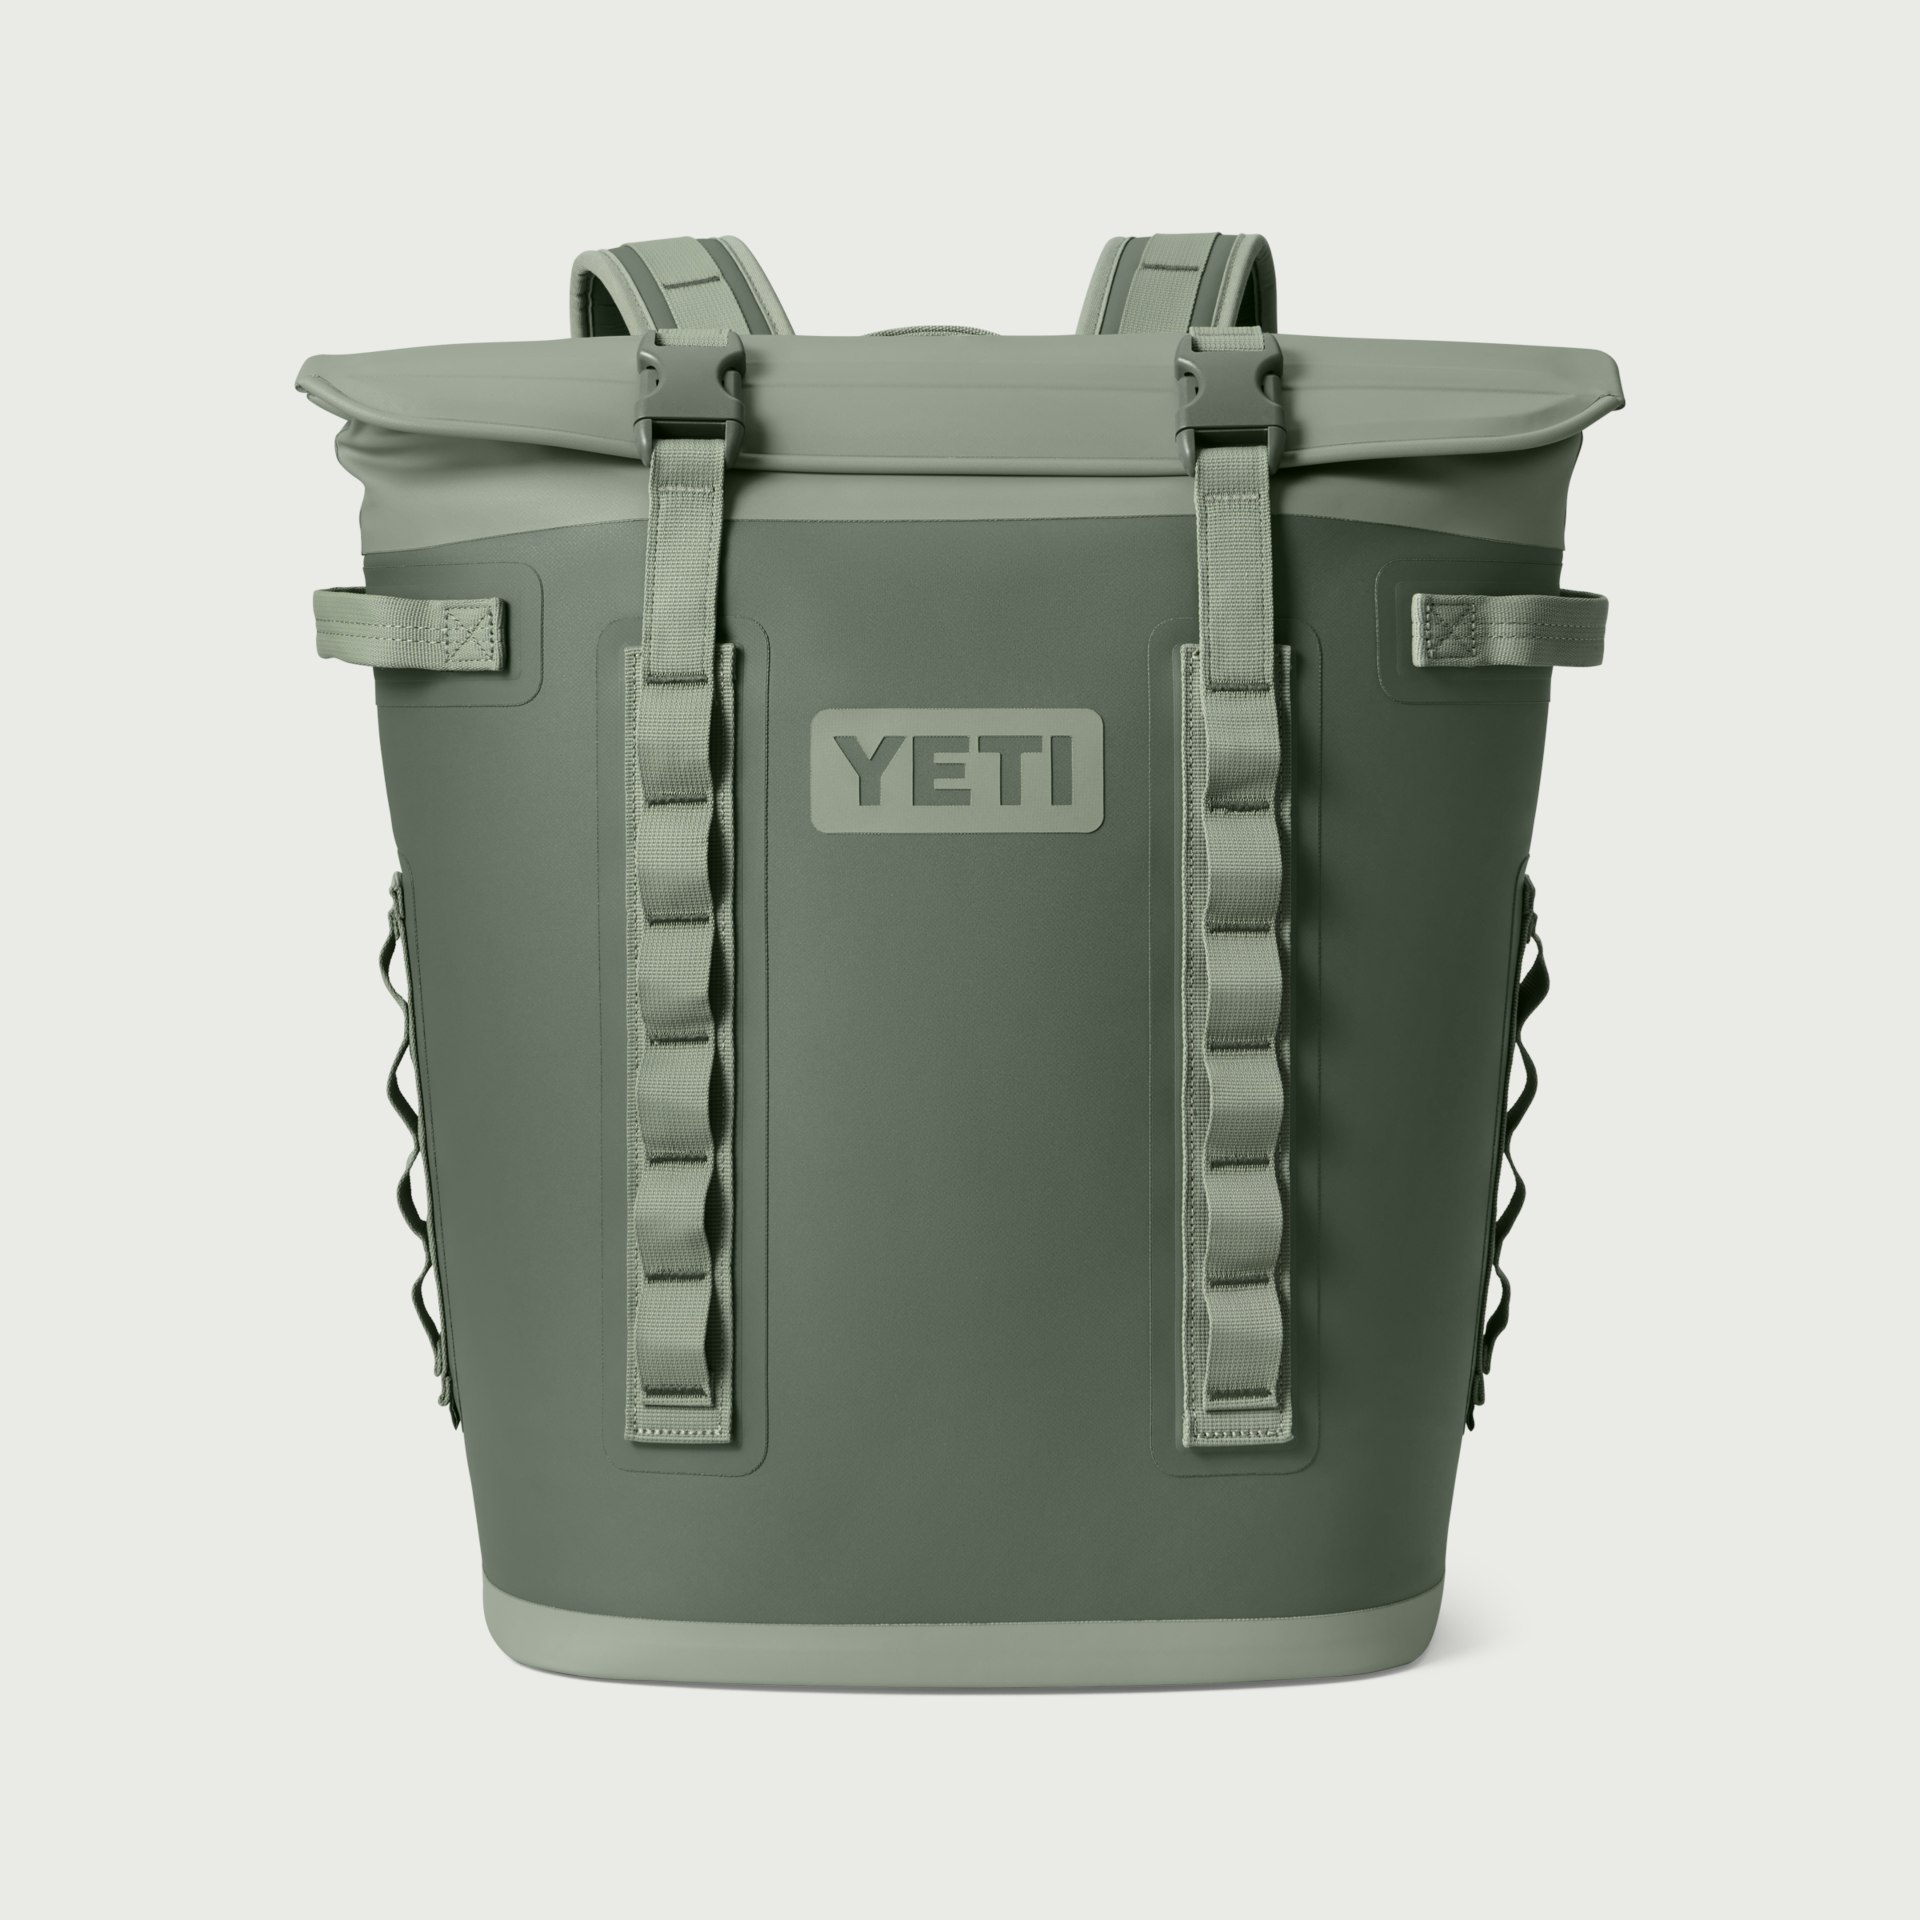 YETI Hopper M20 Soft Backpack Cooler in Camp Green